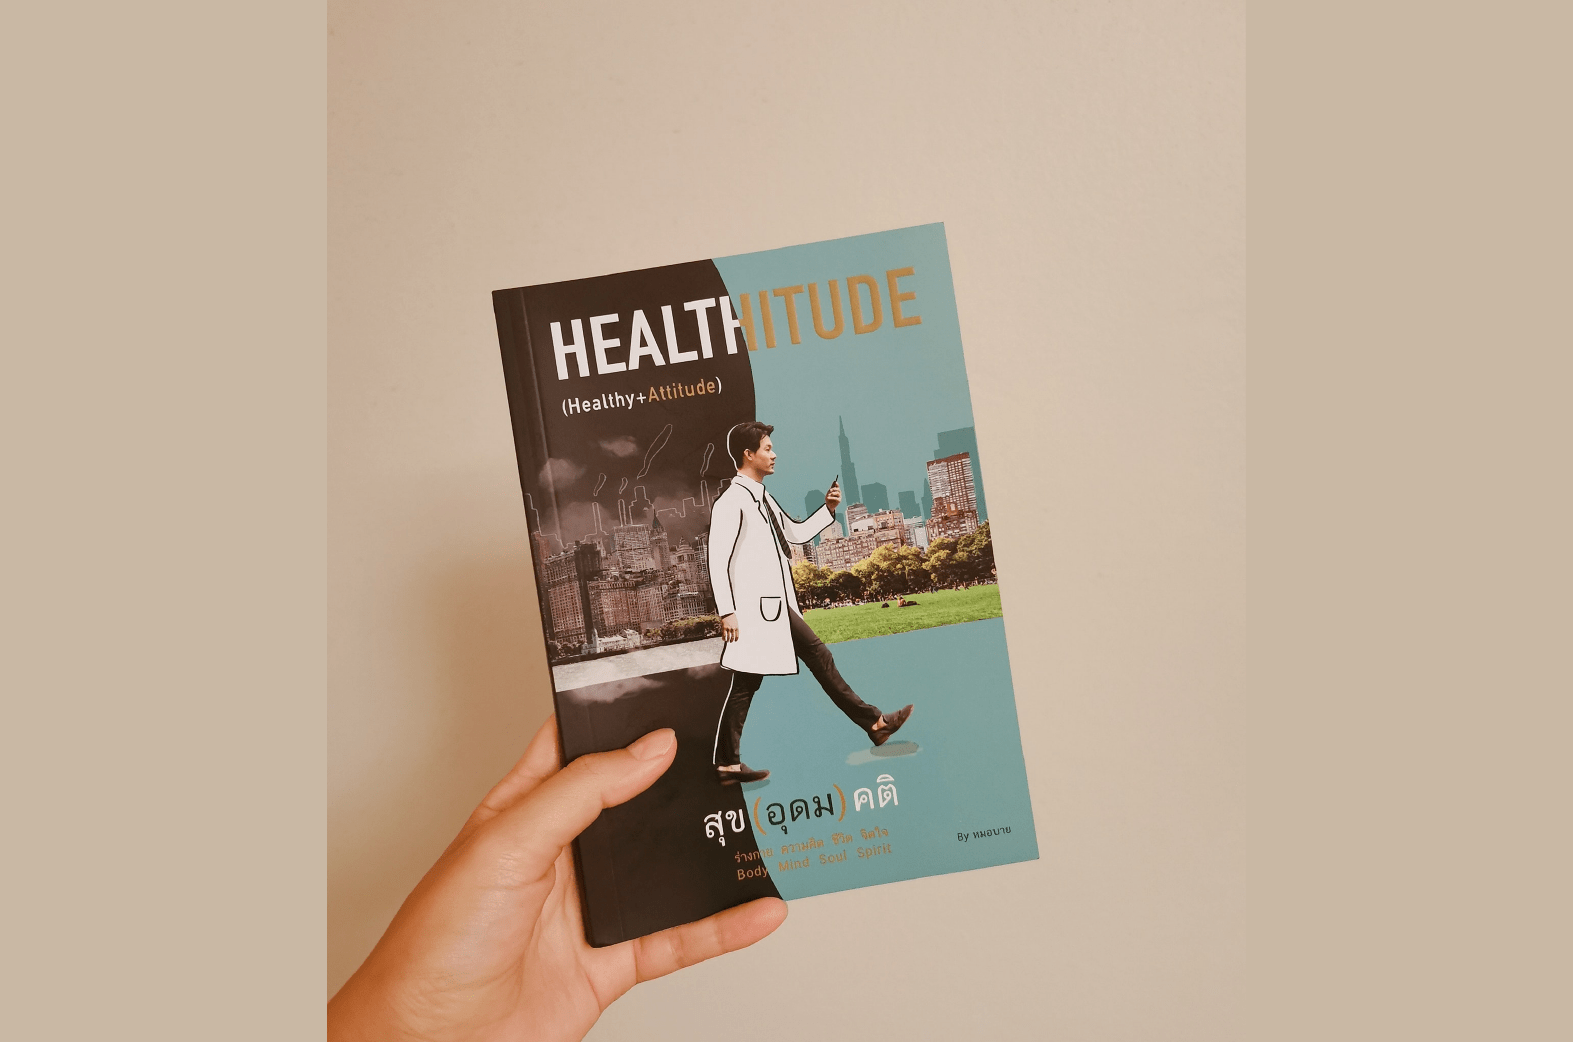 Healthitude